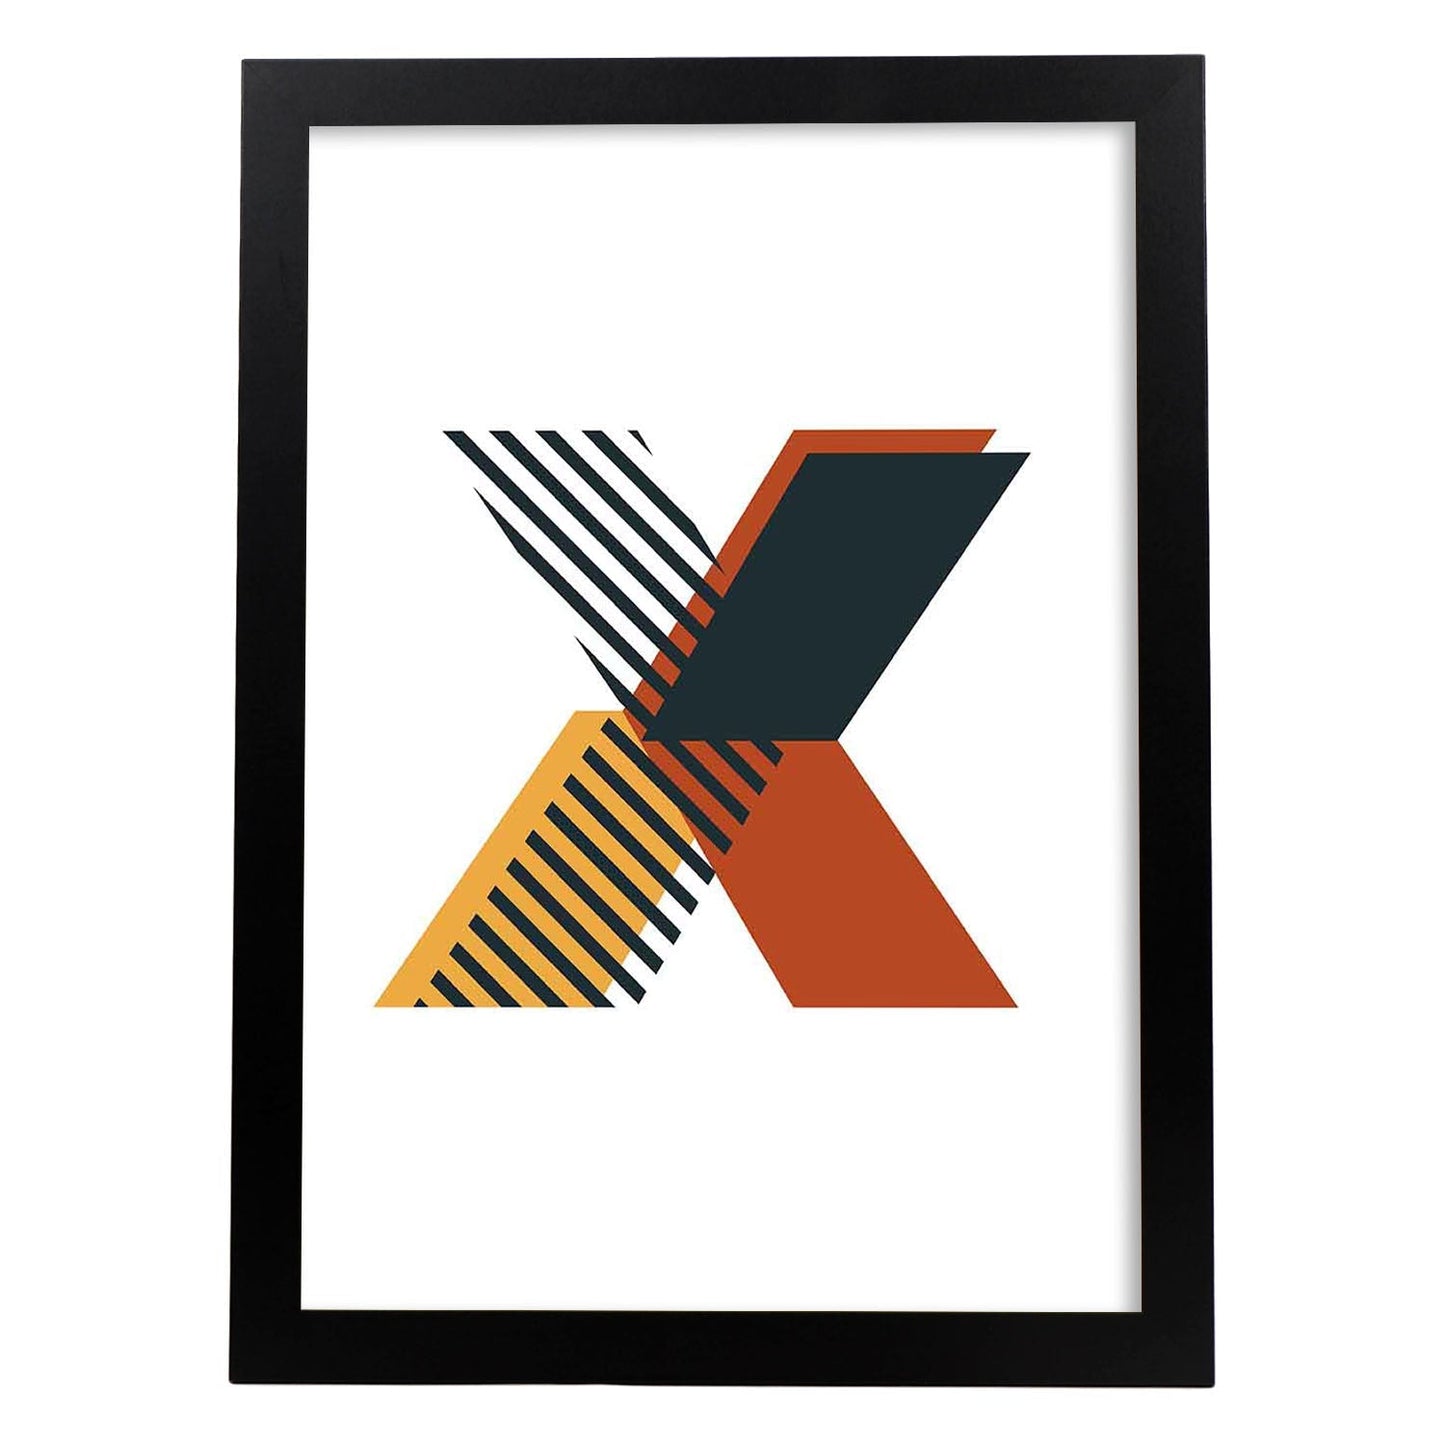 Poster de letra X. Lámina estilo Geometria con imágenes del alfabeto.-Artwork-Nacnic-A4-Marco Negro-Nacnic Estudio SL